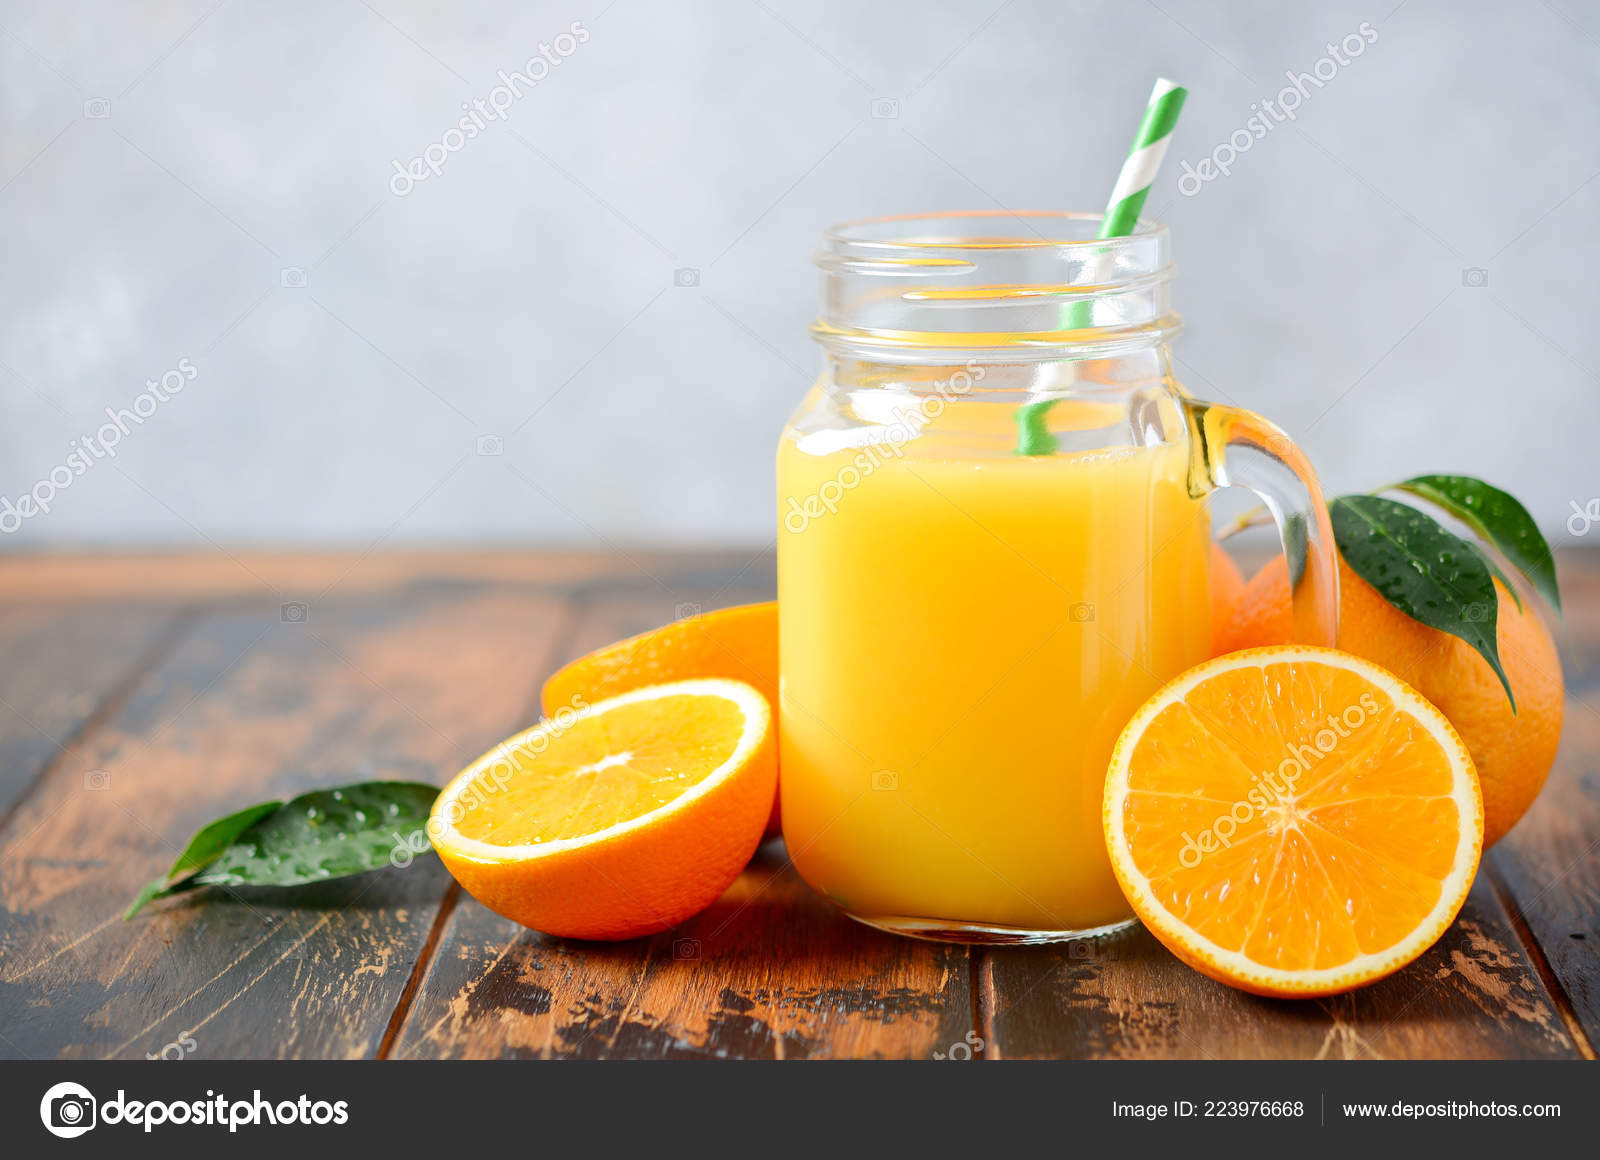 https://st4.depositphotos.com/6476244/22397/i/1600/depositphotos_223976668-stock-photo-fresh-orange-juice-jar-old.jpg